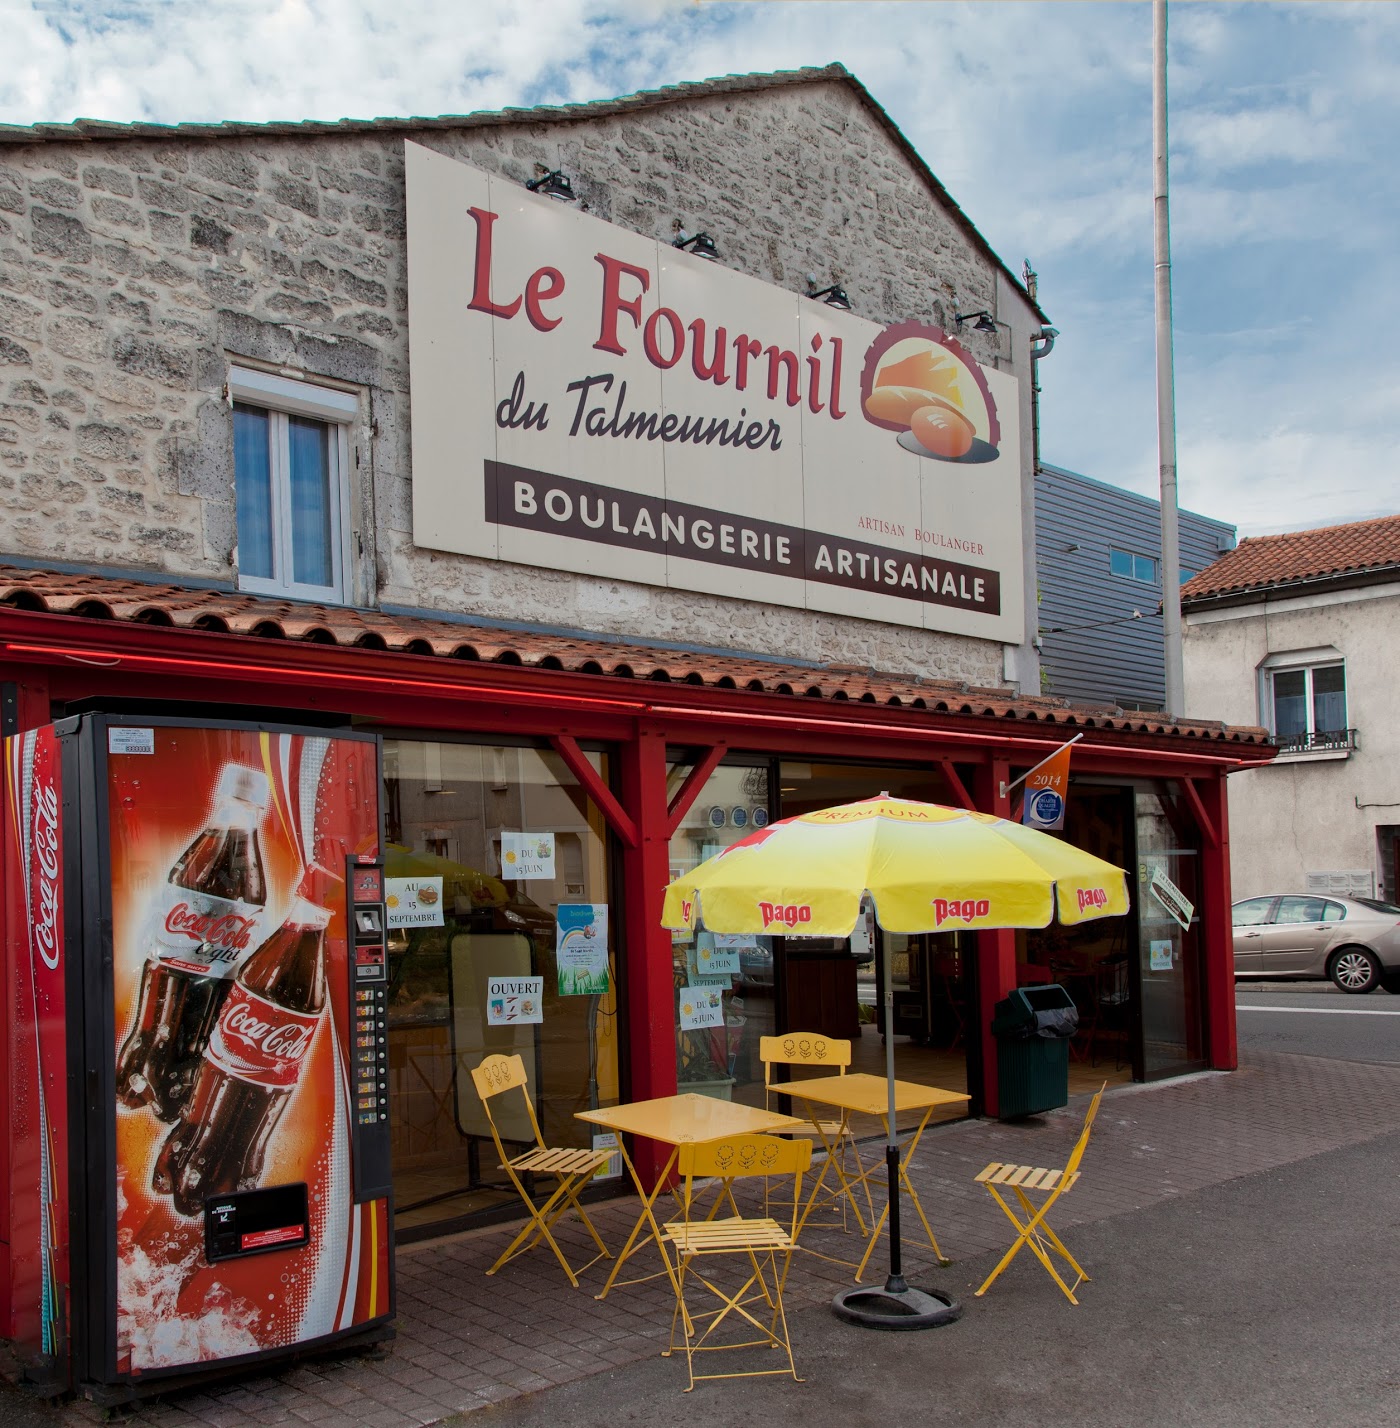 Boulangerie Artisanale "Le Fournil Du Talmeunier"